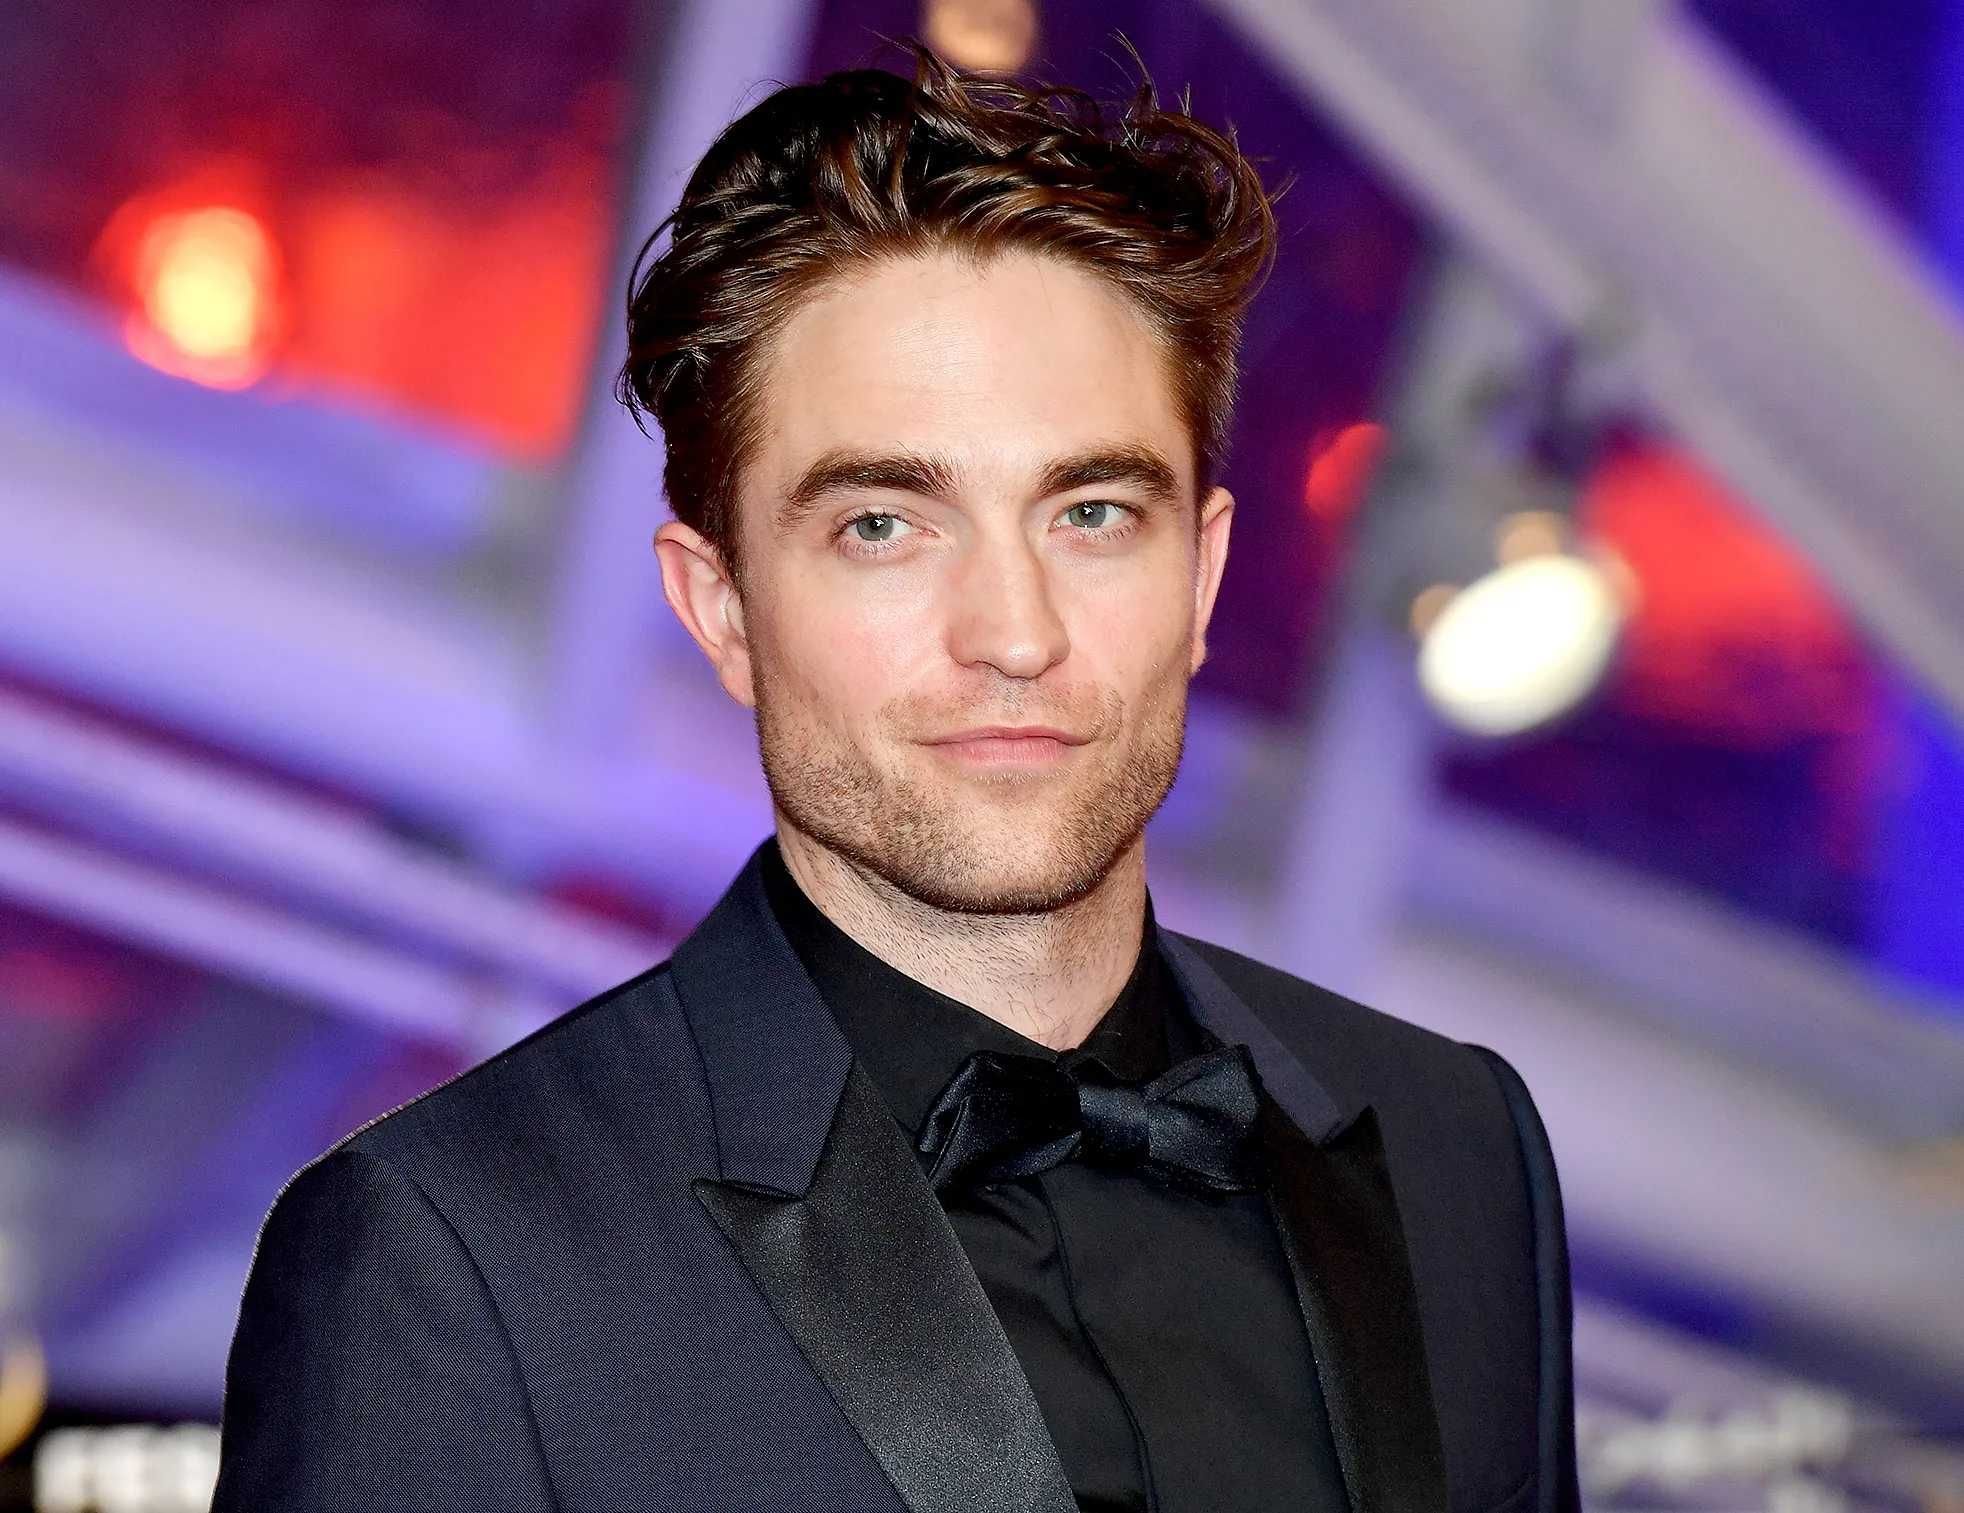 Robert Pattinson's Shift from Twilight to Gotham Recalling the